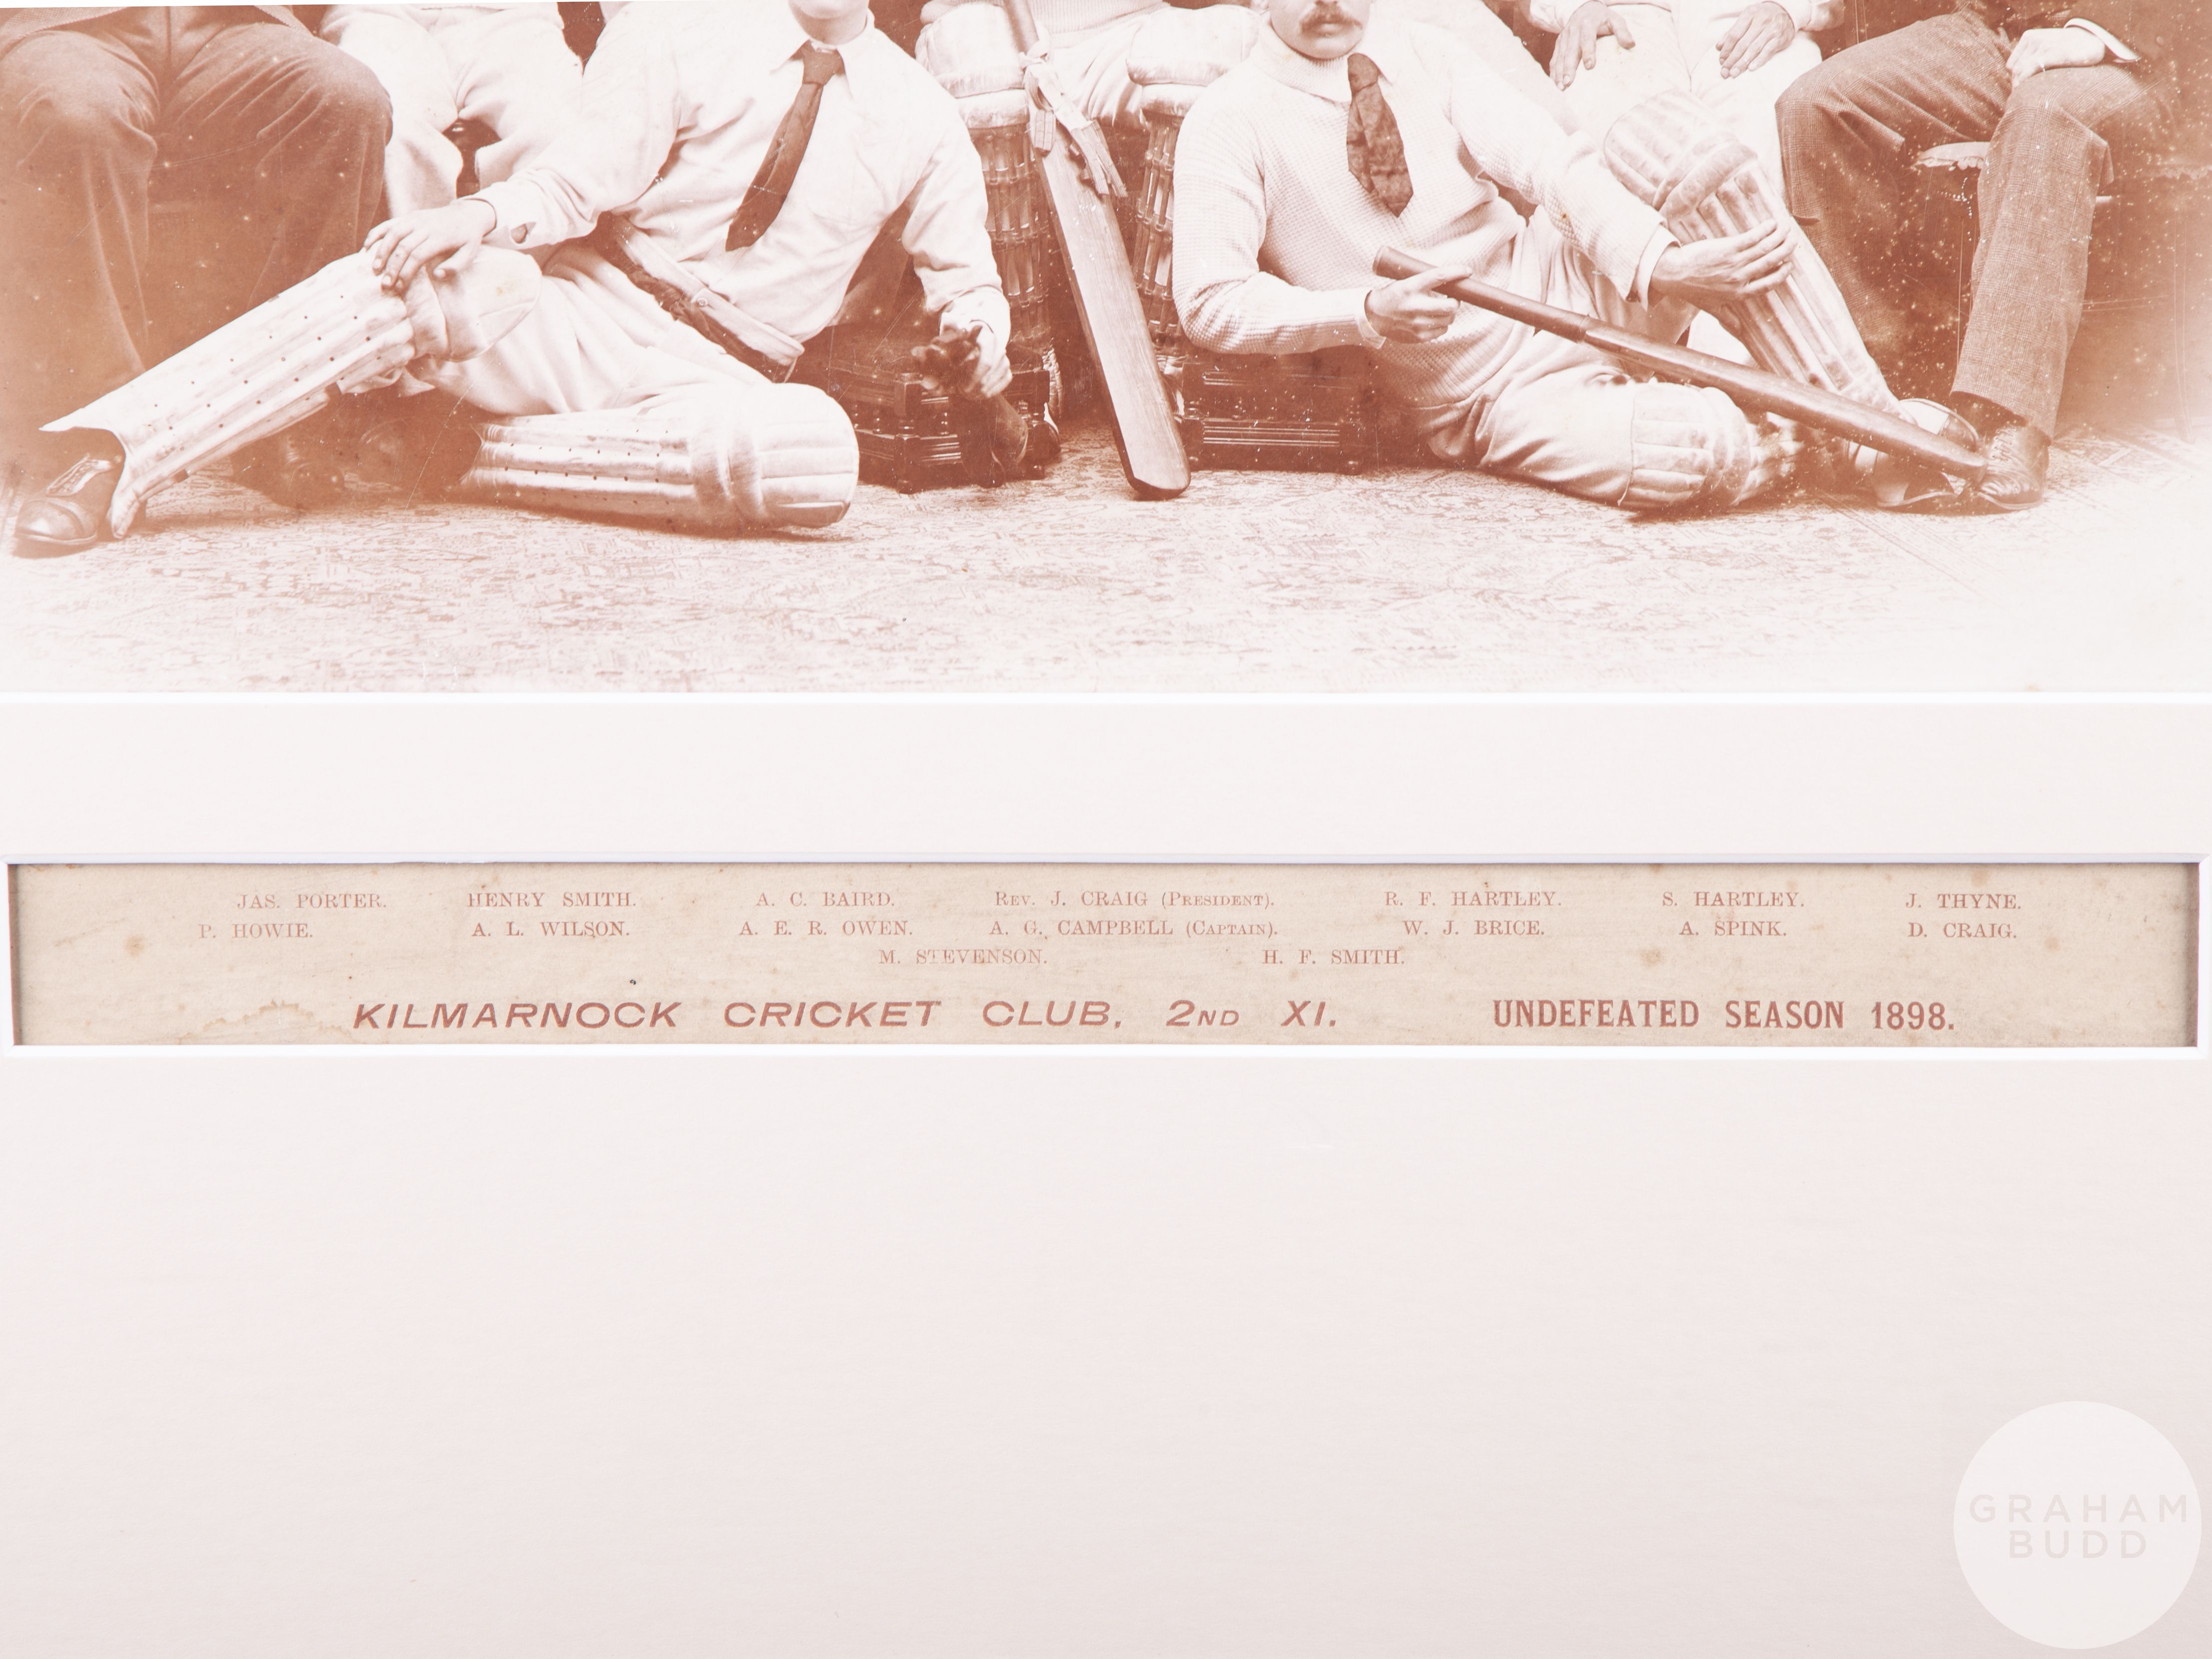 Hugh Smith sepia-toned Kilmarnock Cricket Club 2nd XI team line up photograph, 1898 - Image 2 of 3